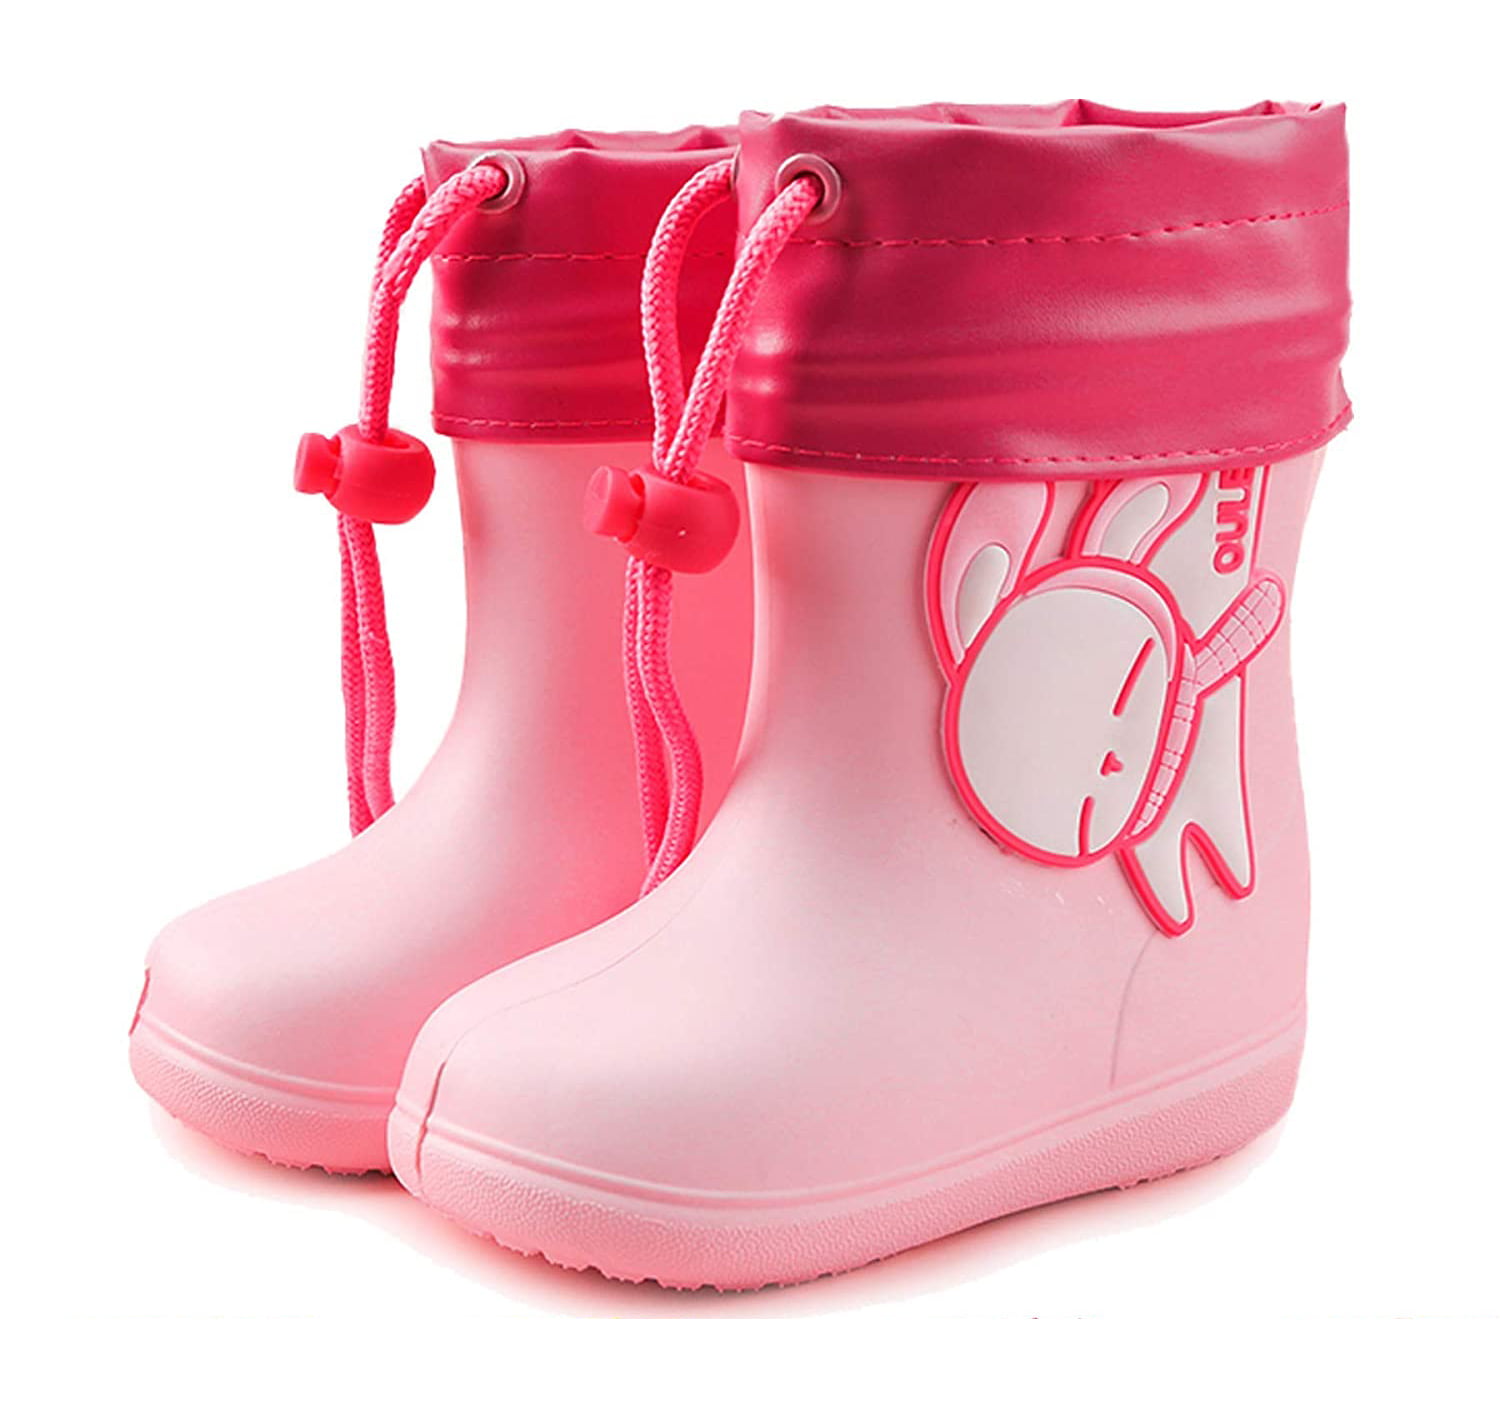 Leopard Boys Girls Non-Slip Waterproof Kids Wellies Wellington Boots Unisex Children Motorbike Rain Boots Shoes